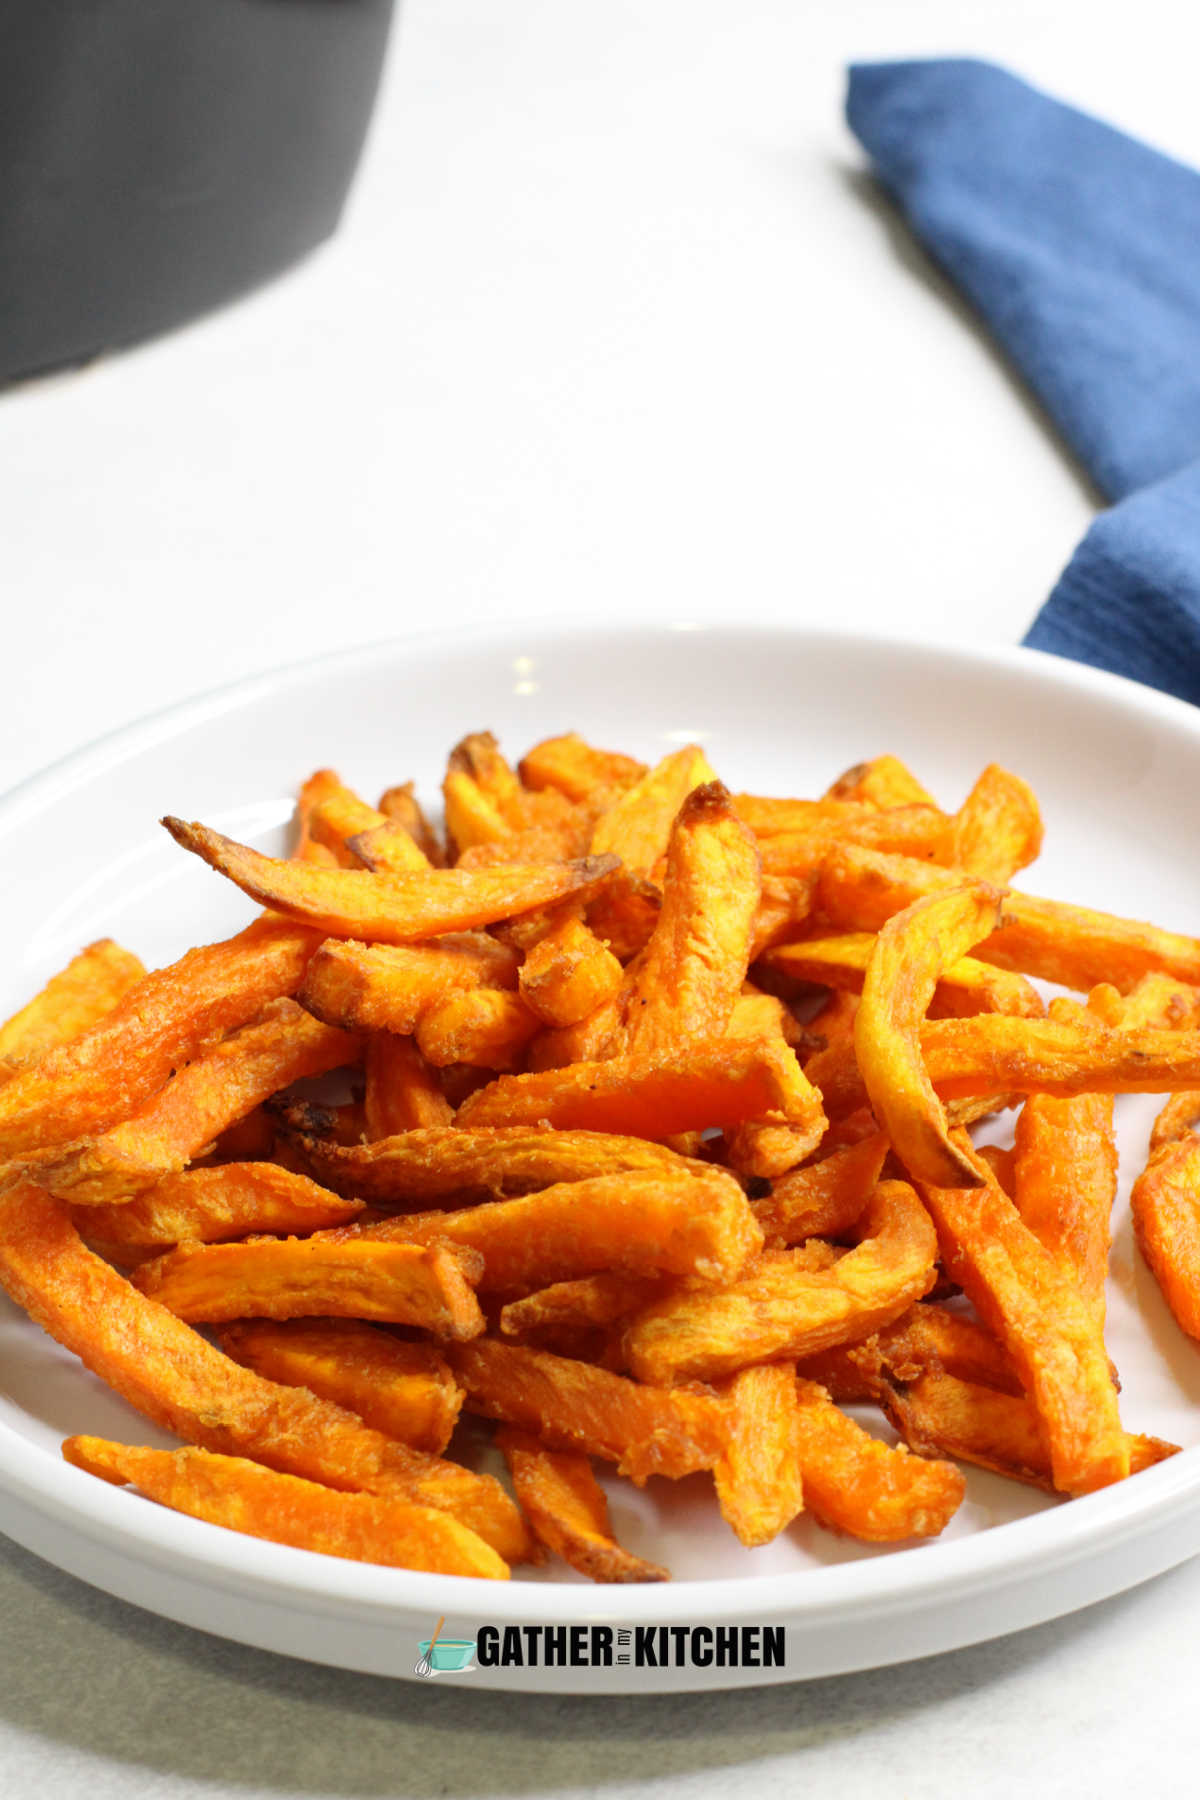 Sweet potato fries on a plate.